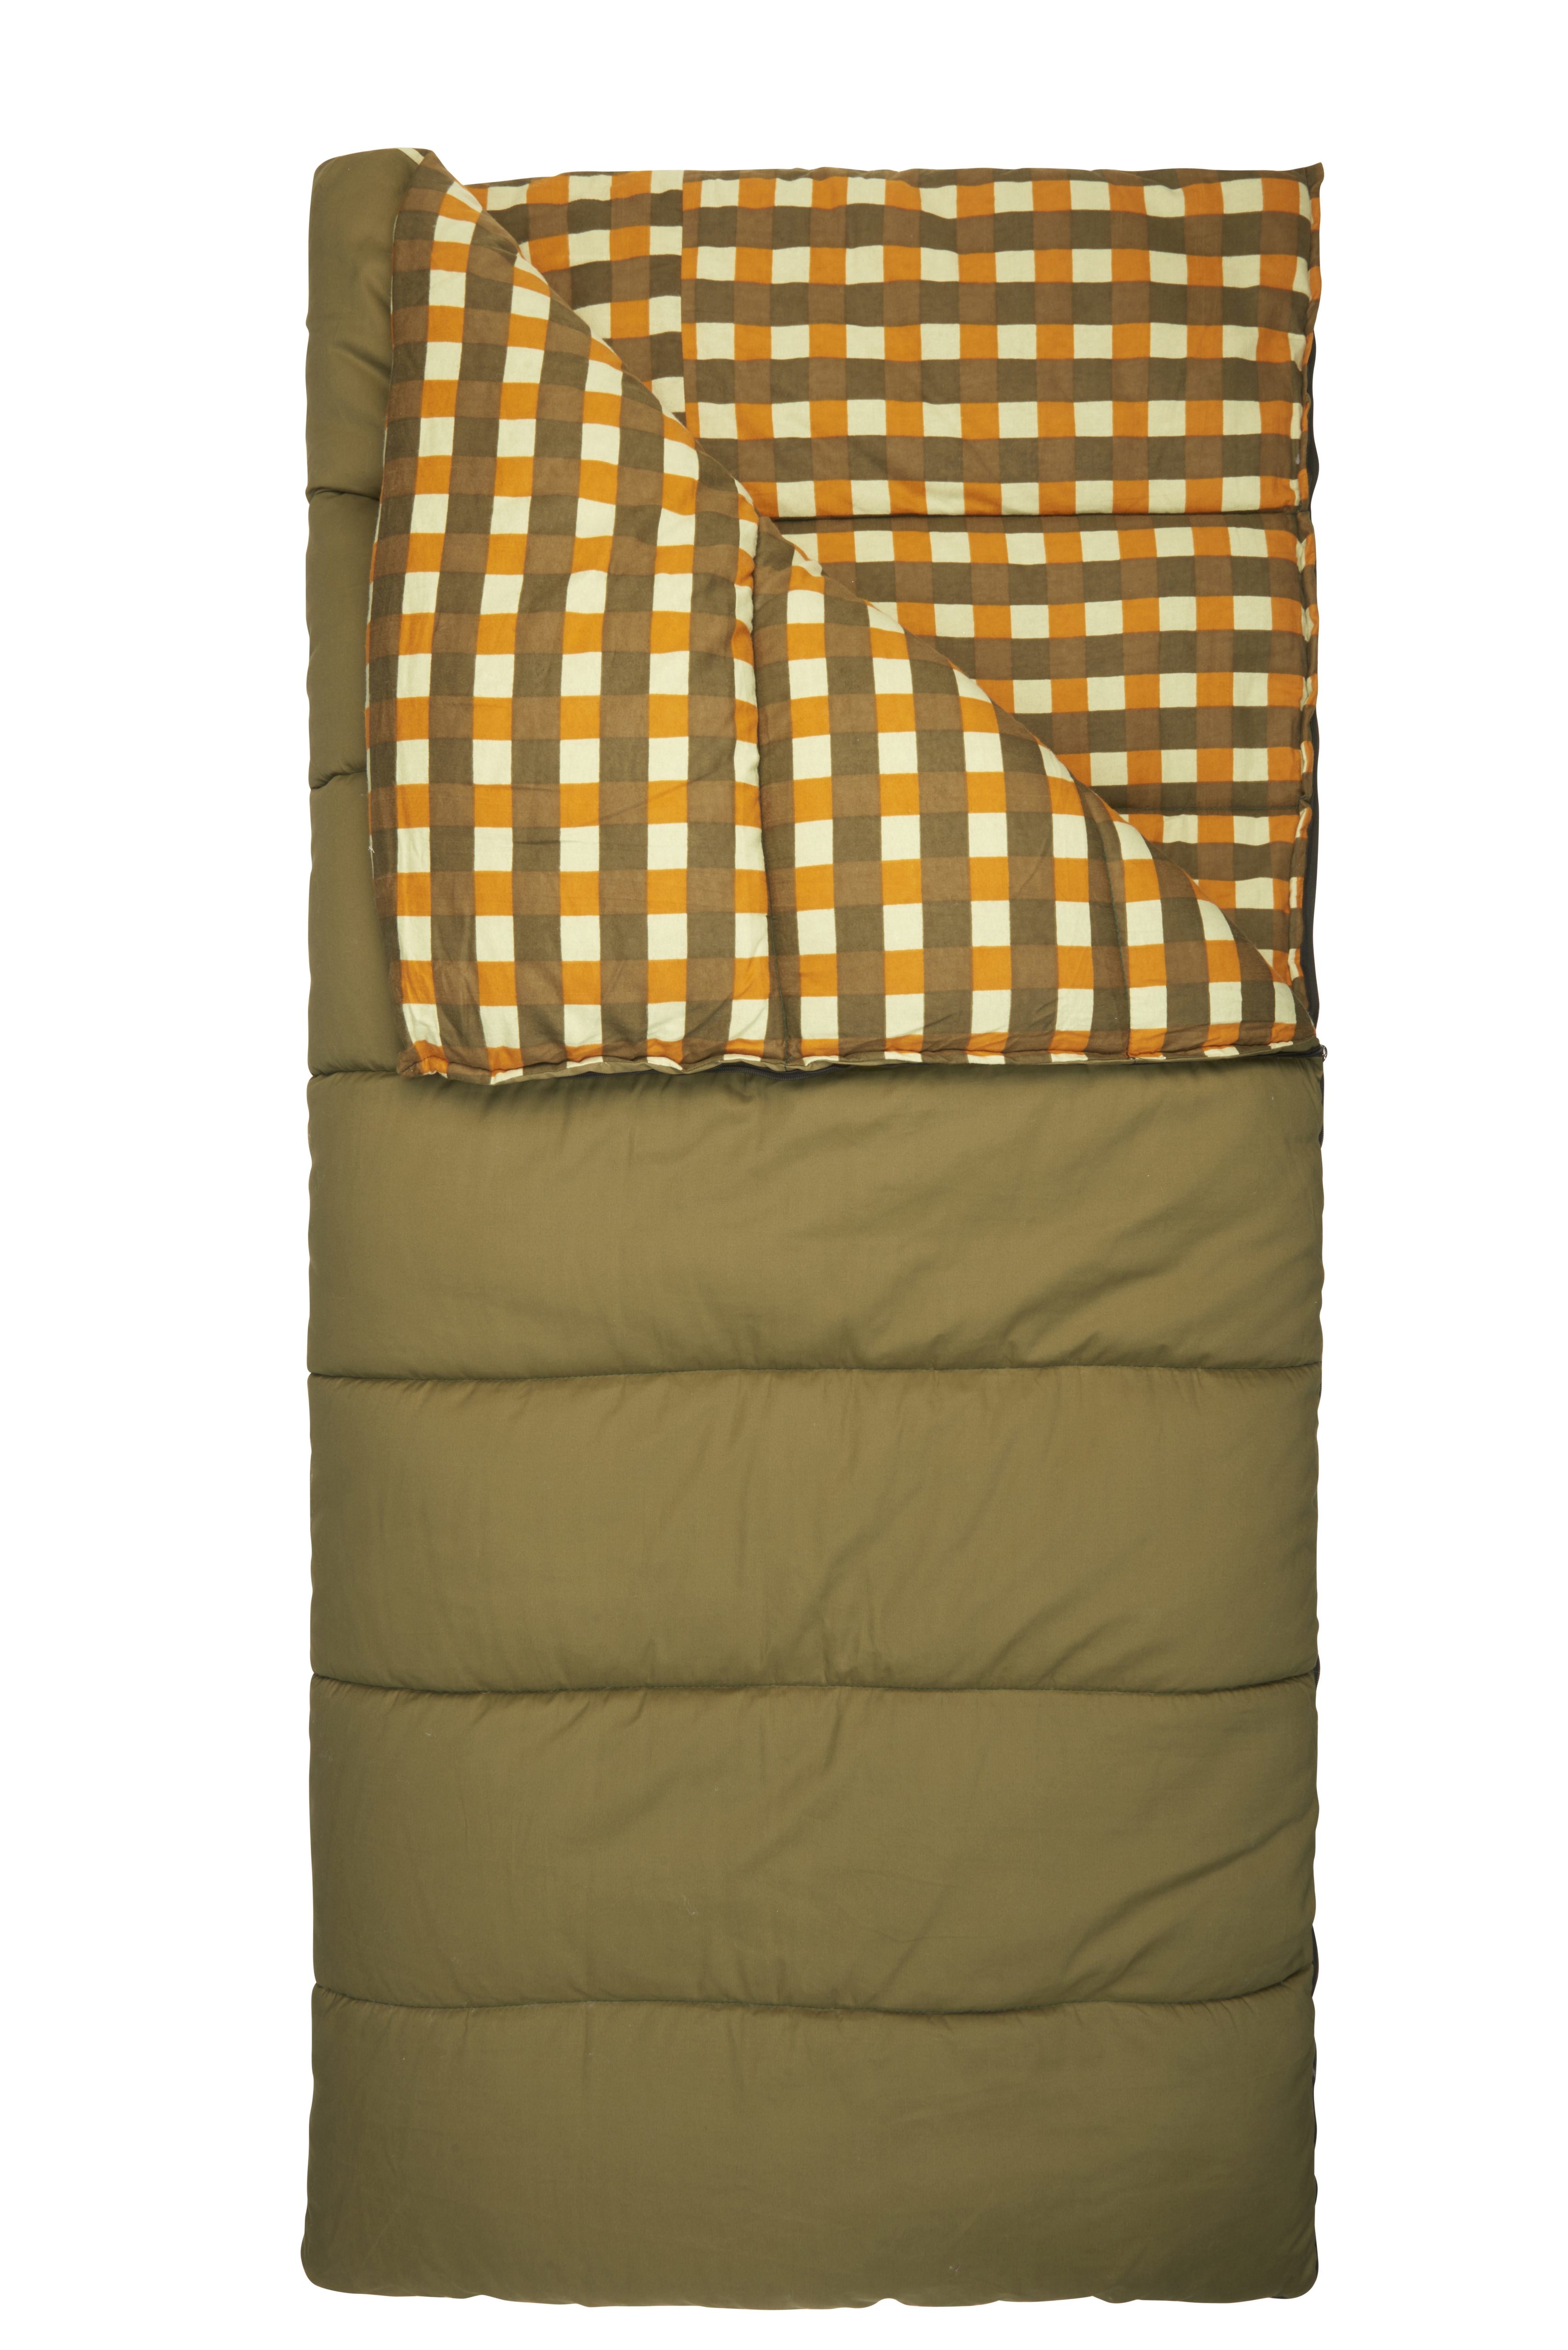 SJK South Fork 15/25 sleeping bag, green, shown partially unzipped